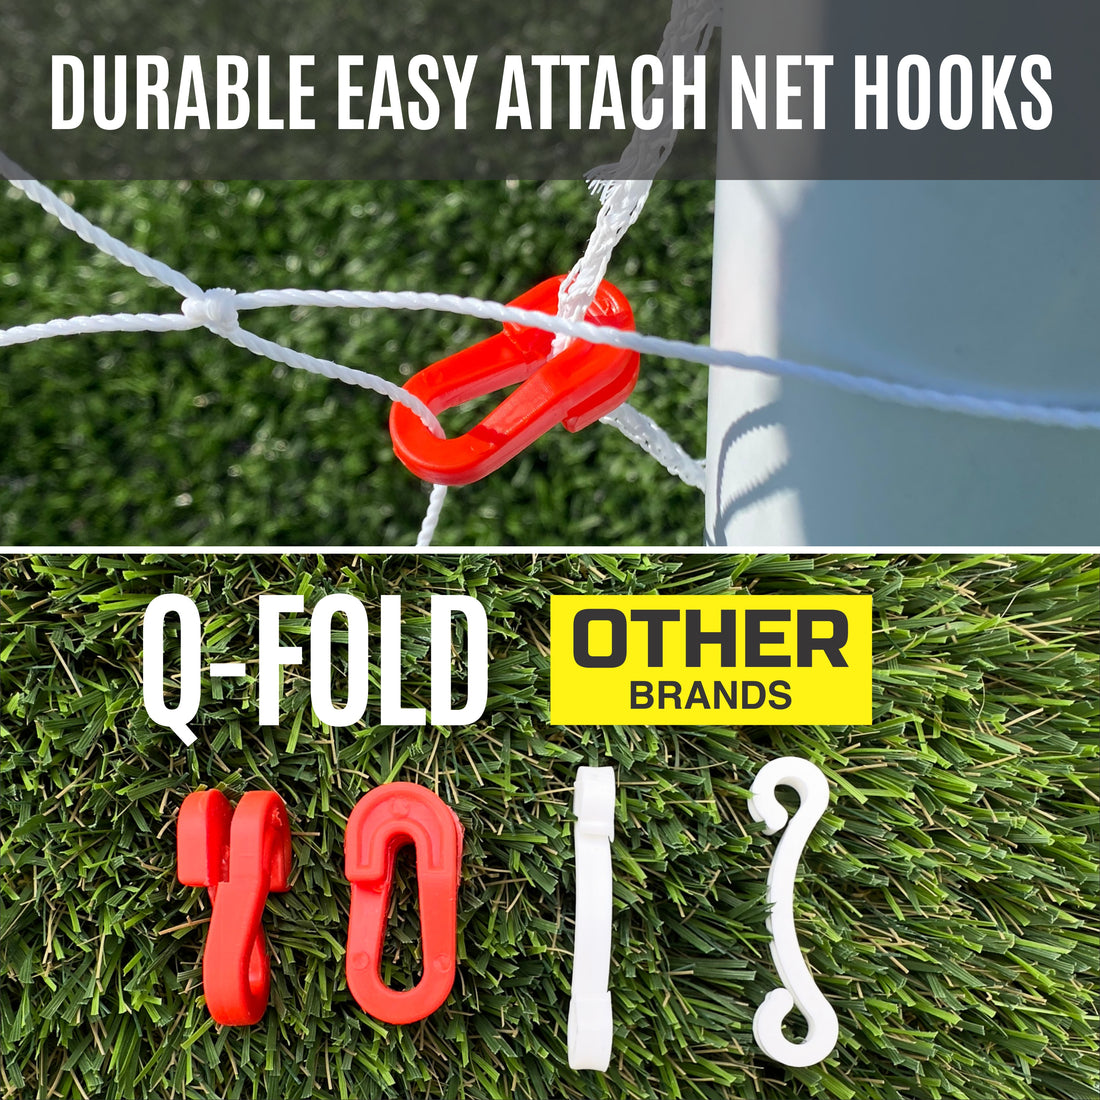 Q-FOLD Folding Soccer Goal 12x6'